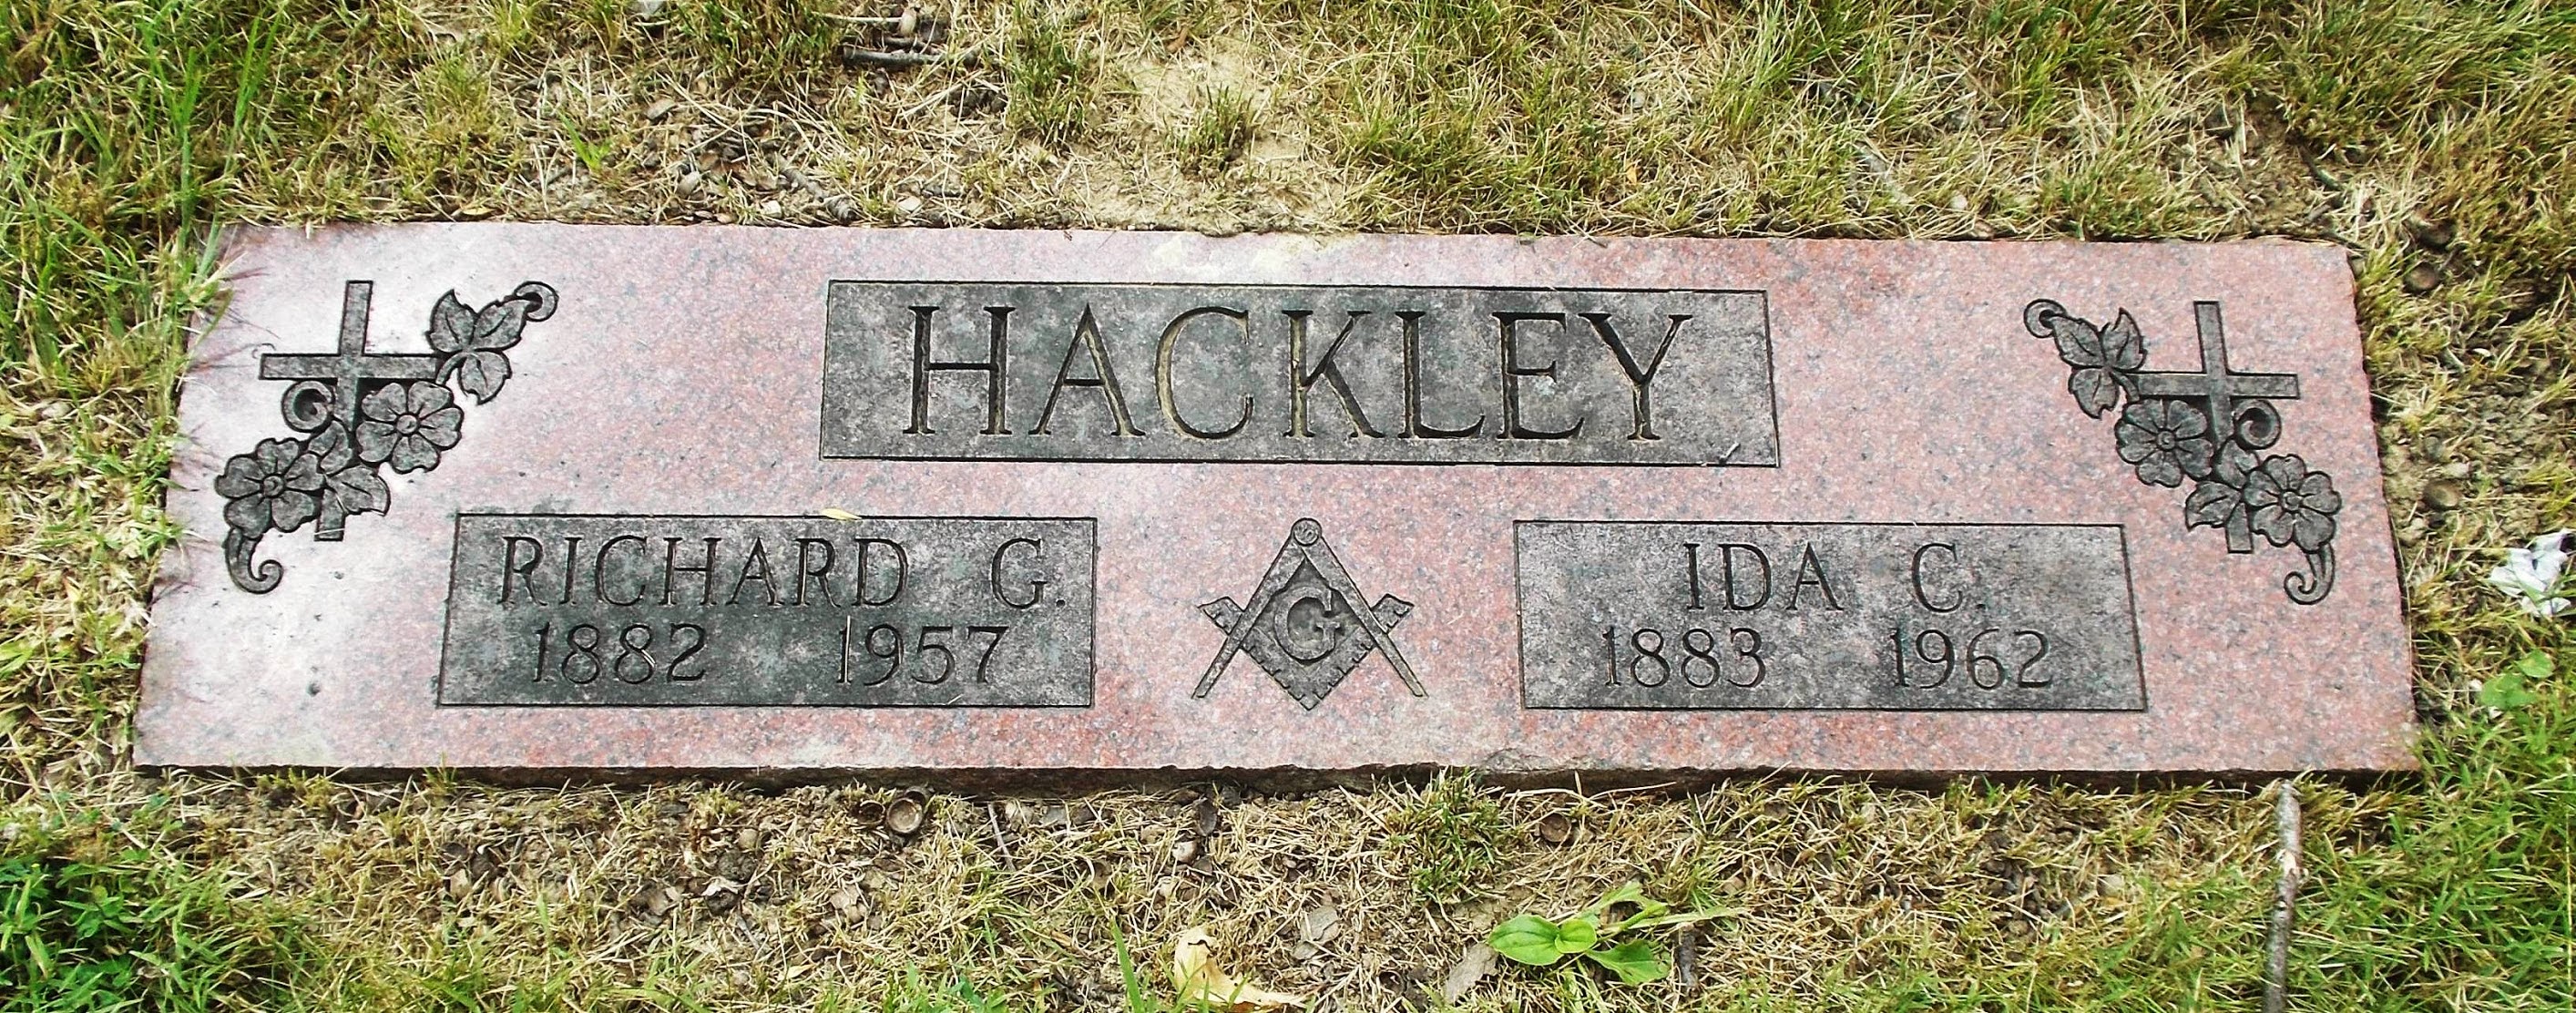 Richard G Hackley